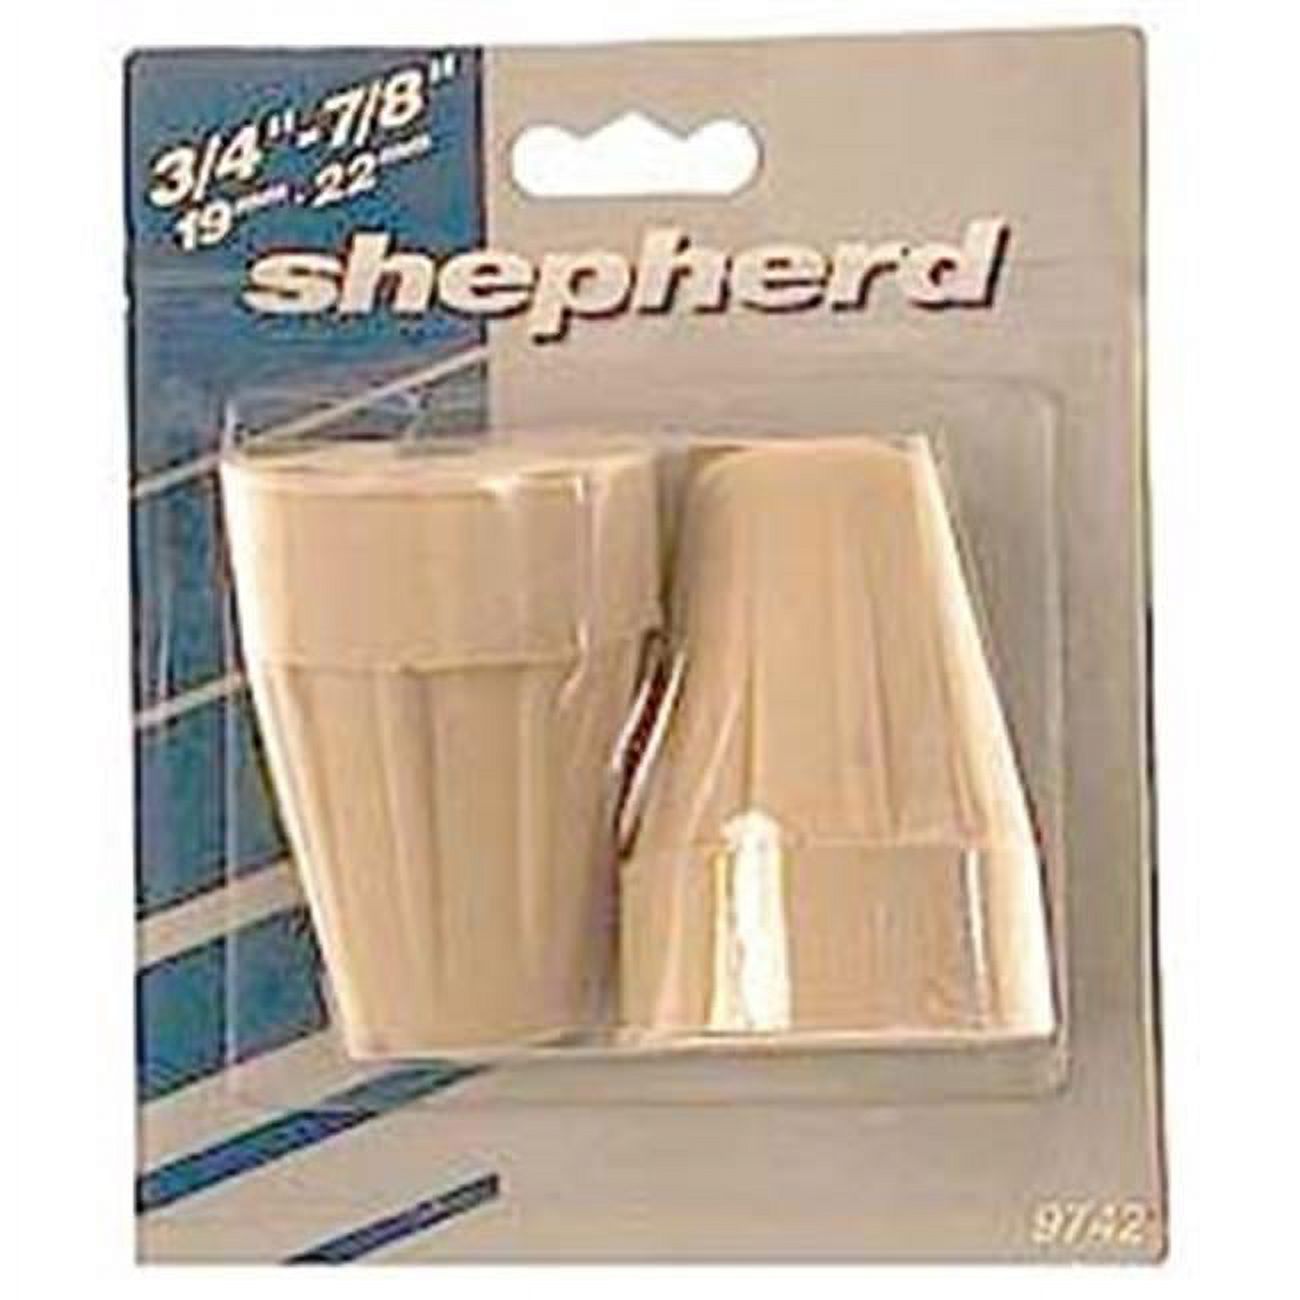 Shepherd Hardware Rubber Crutch Tips White Round 2 pk - image 1 of 2